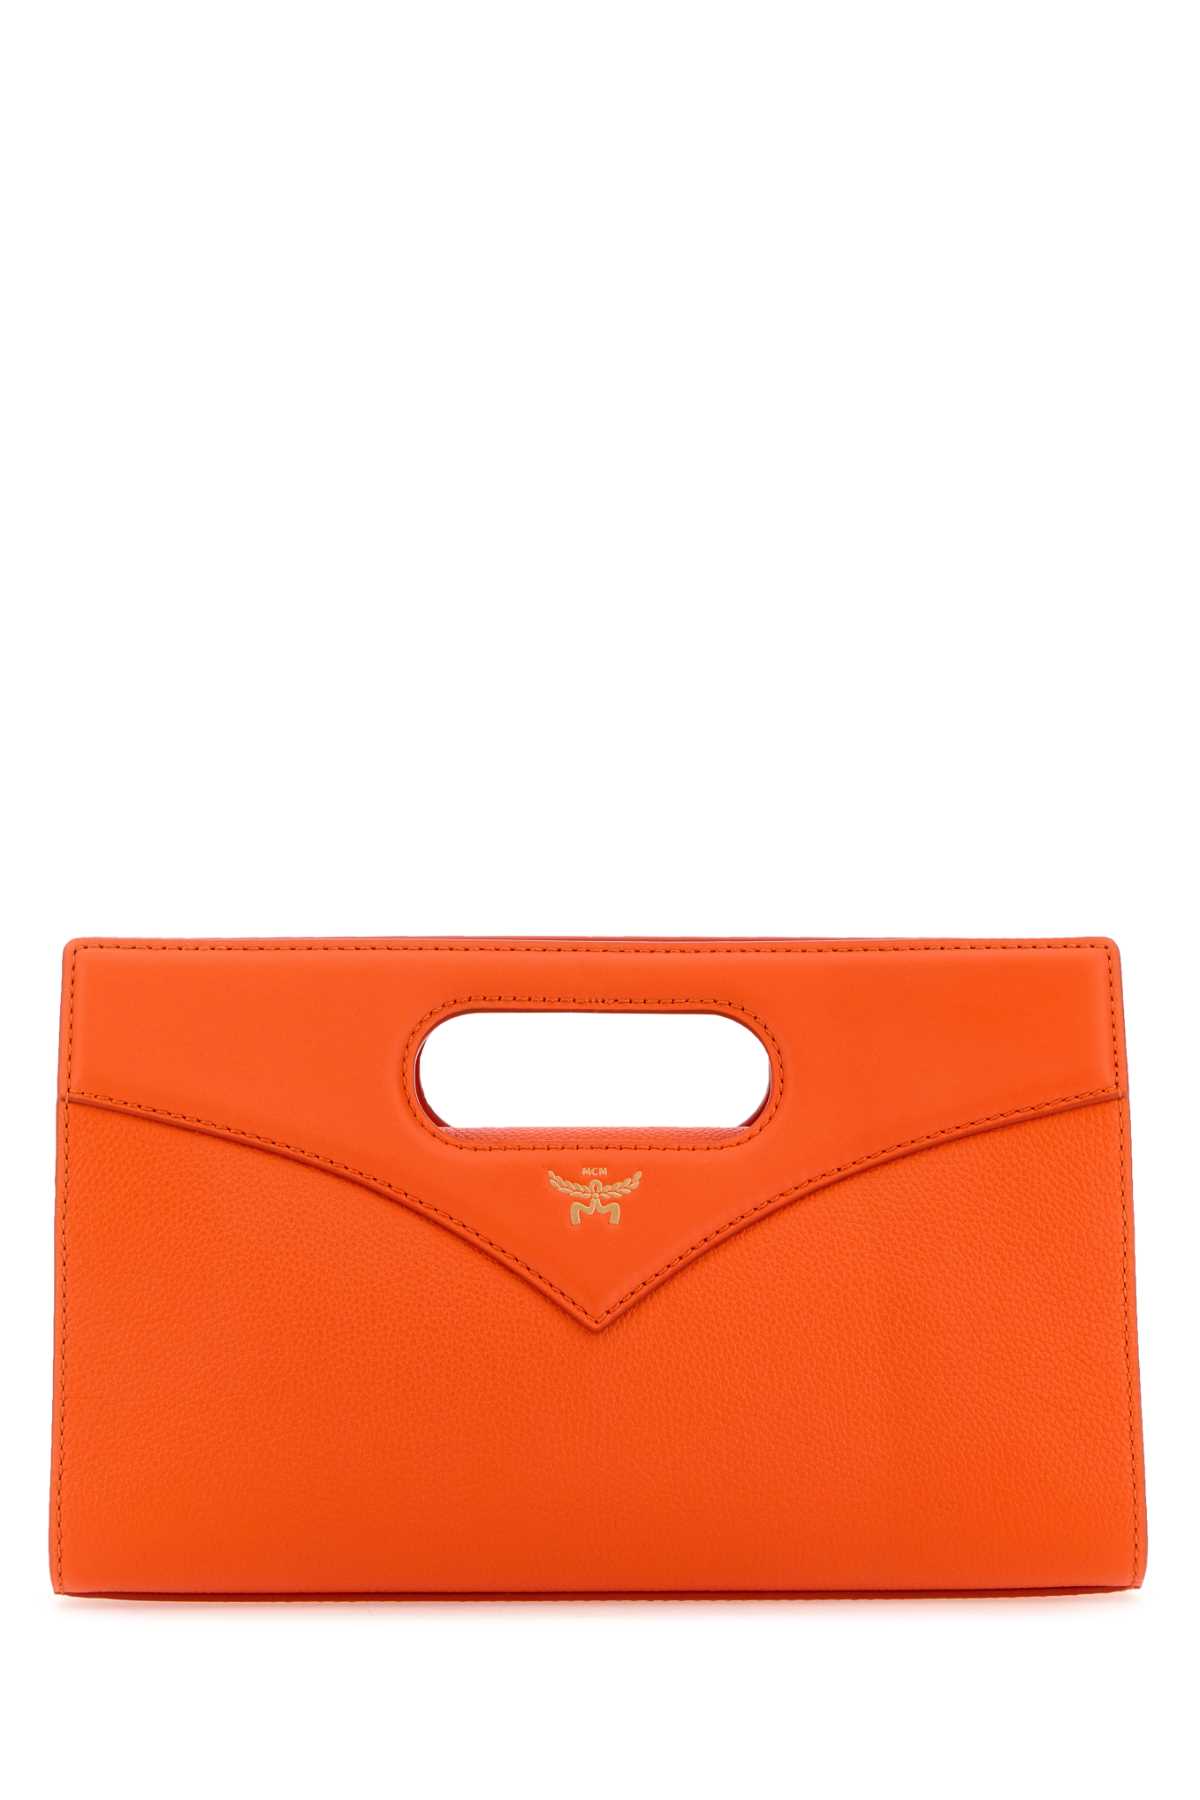 Fluo Orange Leather Diamond Handbag